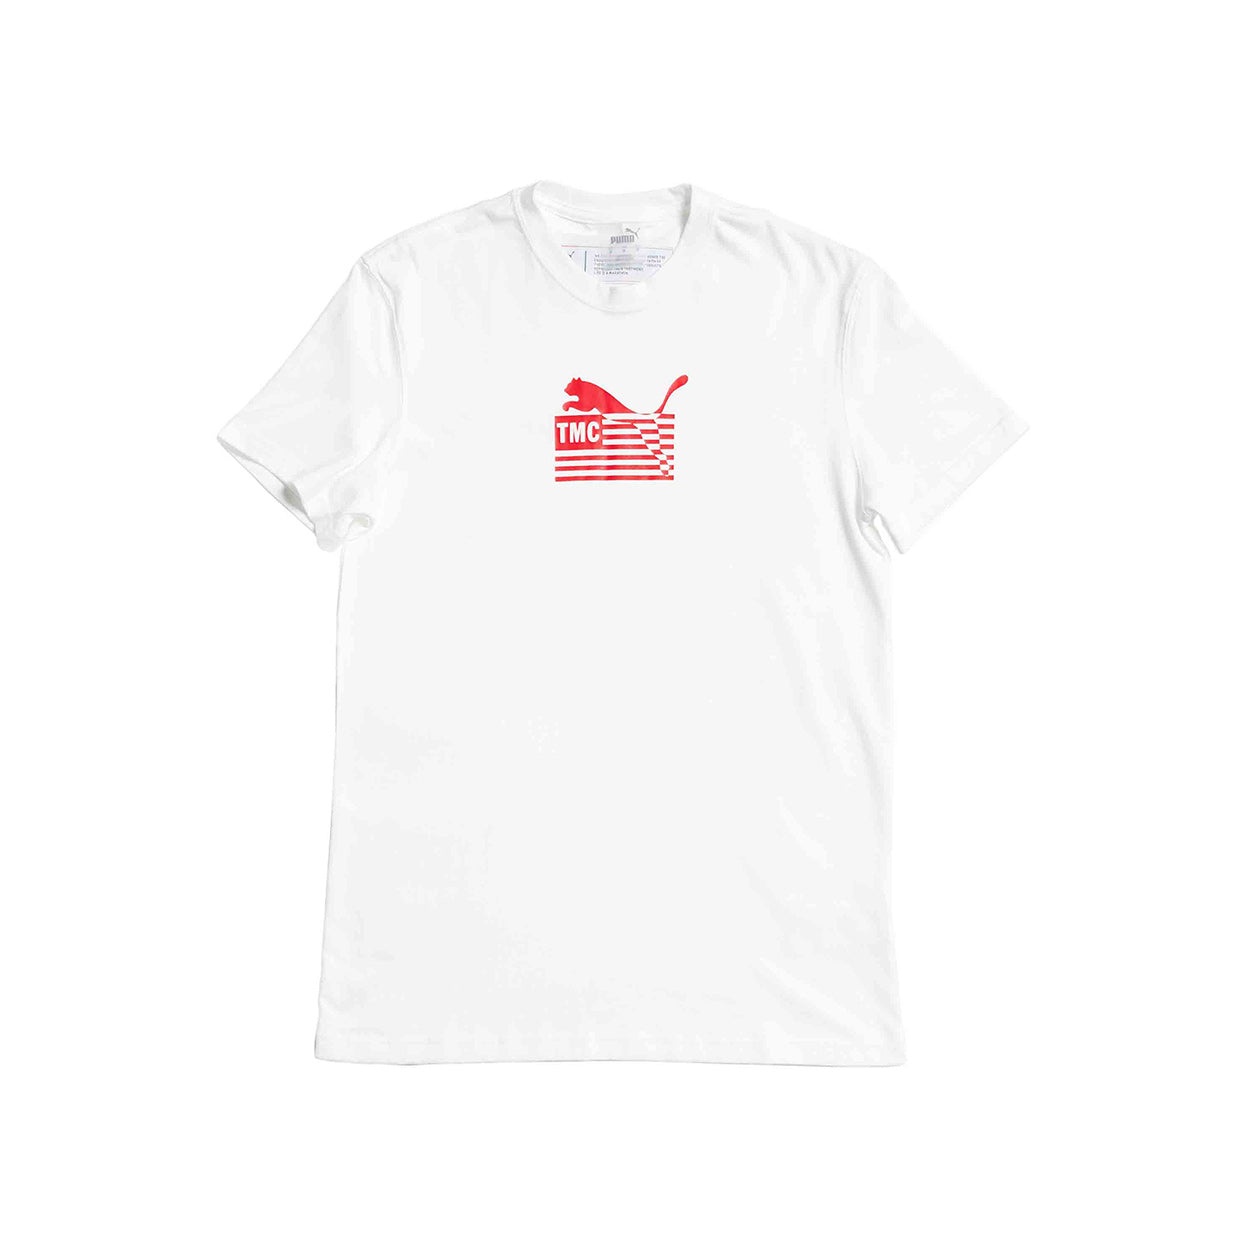 TMC T-shirt - – The Puma x Marathon White/Red Clothing